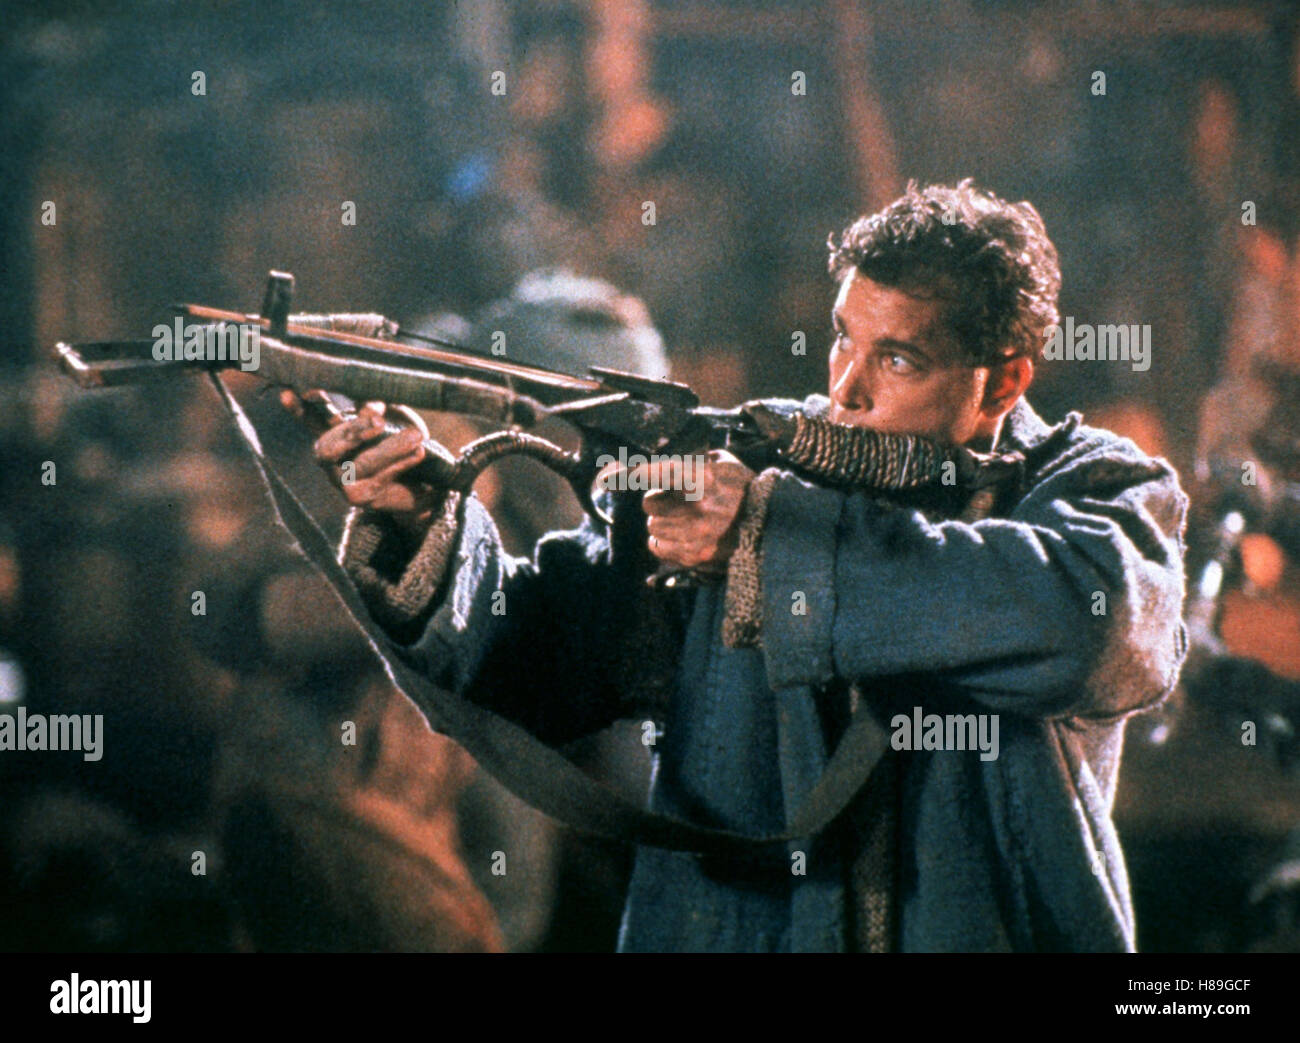 Flucht aus Absolom, (NO ESCAPE / ESCAPE FROM ABSOLOM) USA 1994, Regie: Martin Campbell, RAY LIOTTA, Stichwort: Waffe, Armbrust, Schießen Stock Photo